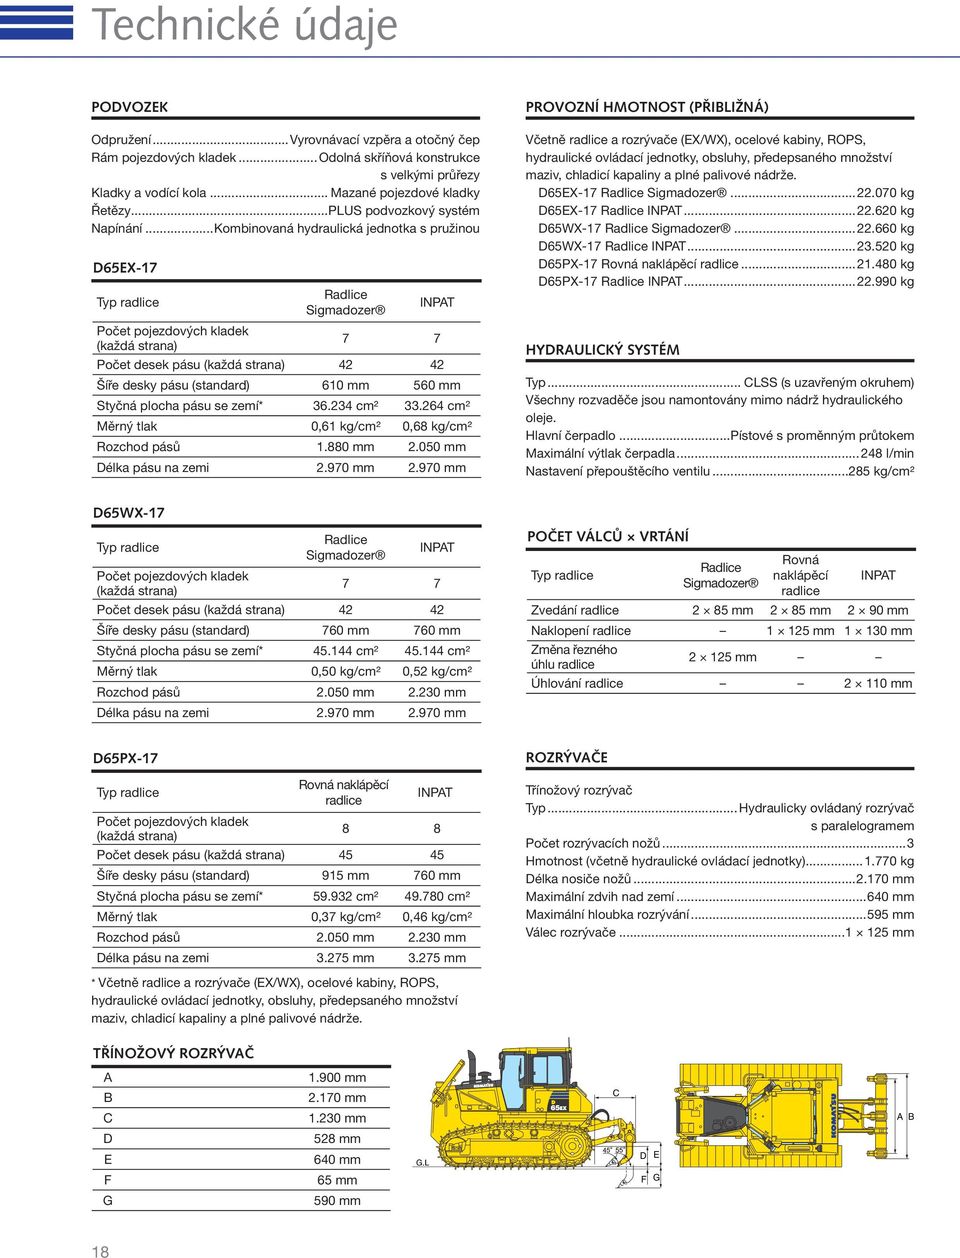 ..Kombinovaná hydraulická jednotka s pružinou D65EX-17 Typ radlice Radlice Sigmadozer INPAT Počet pojezdových kladek (každá strana) 7 7 Počet desek pásu (každá strana) 42 42 Šíře desky pásu